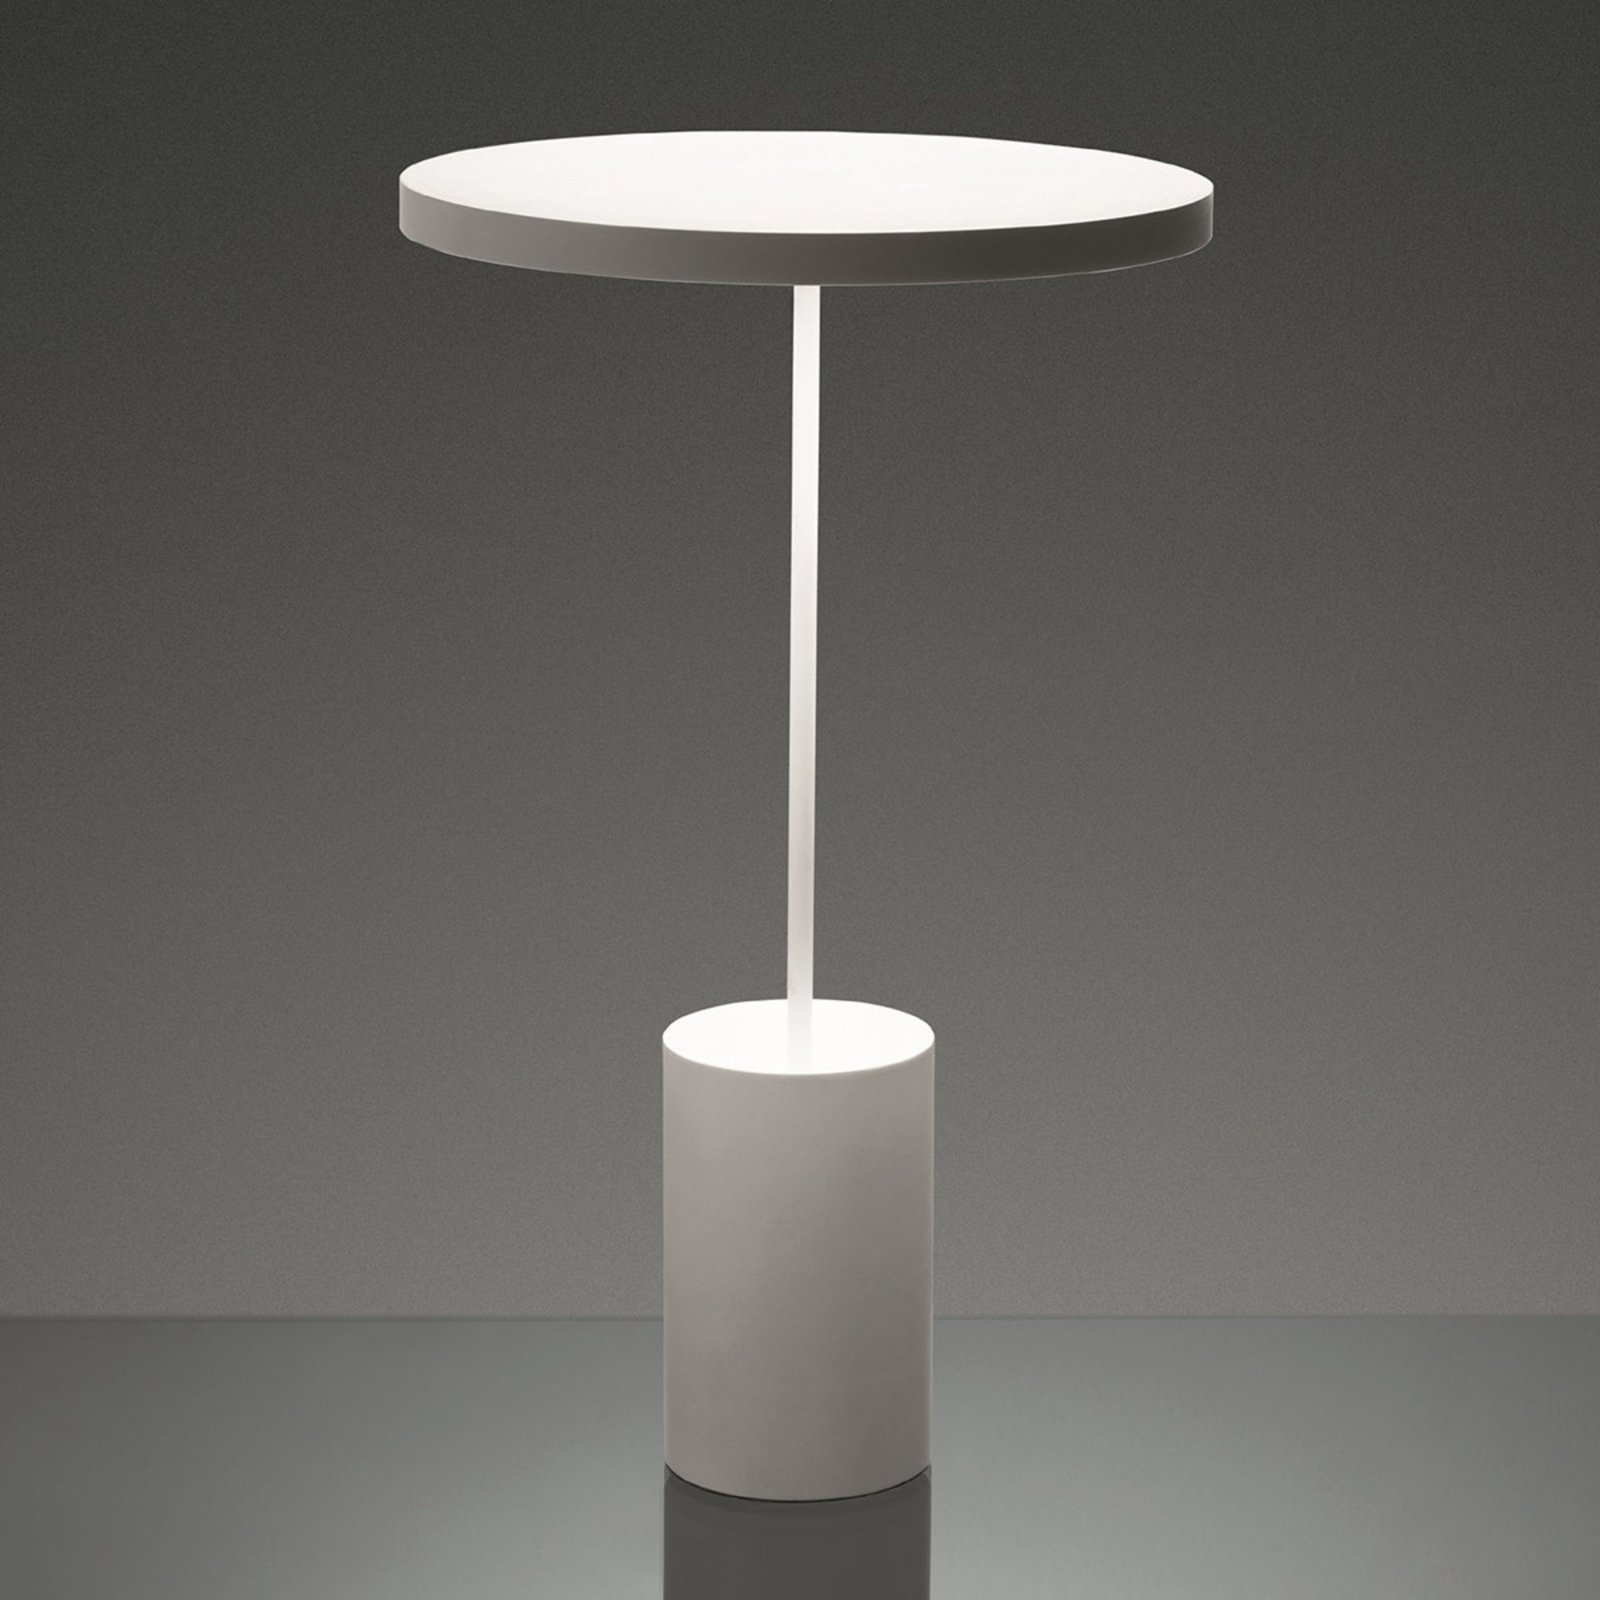 Stolná LED lampa Artemide Sisifo v bielej